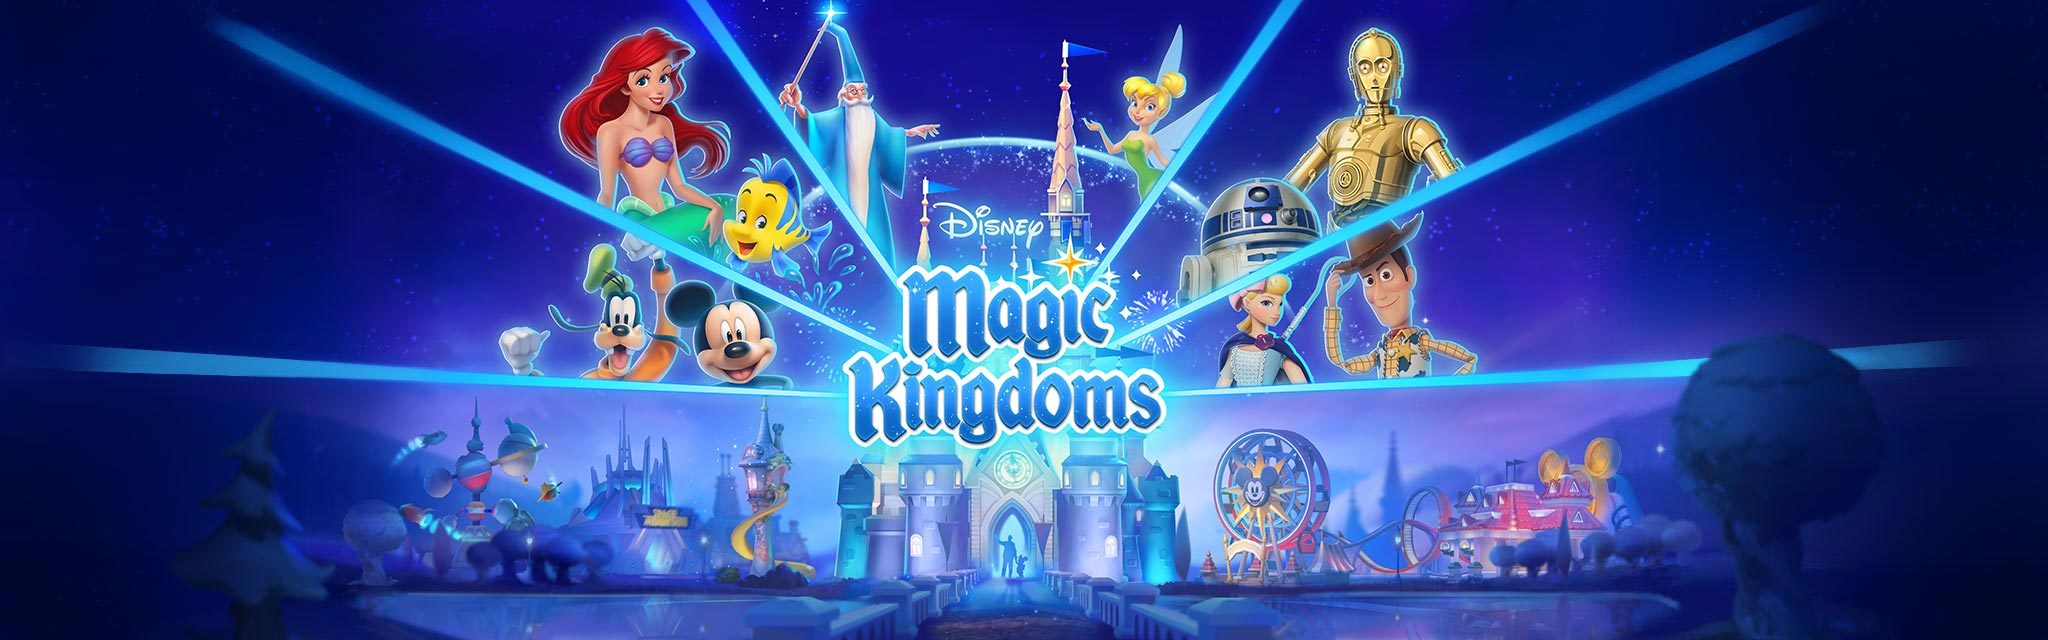 Disney Magic Kingdoms Disney Lol - kingdom of magic roblox